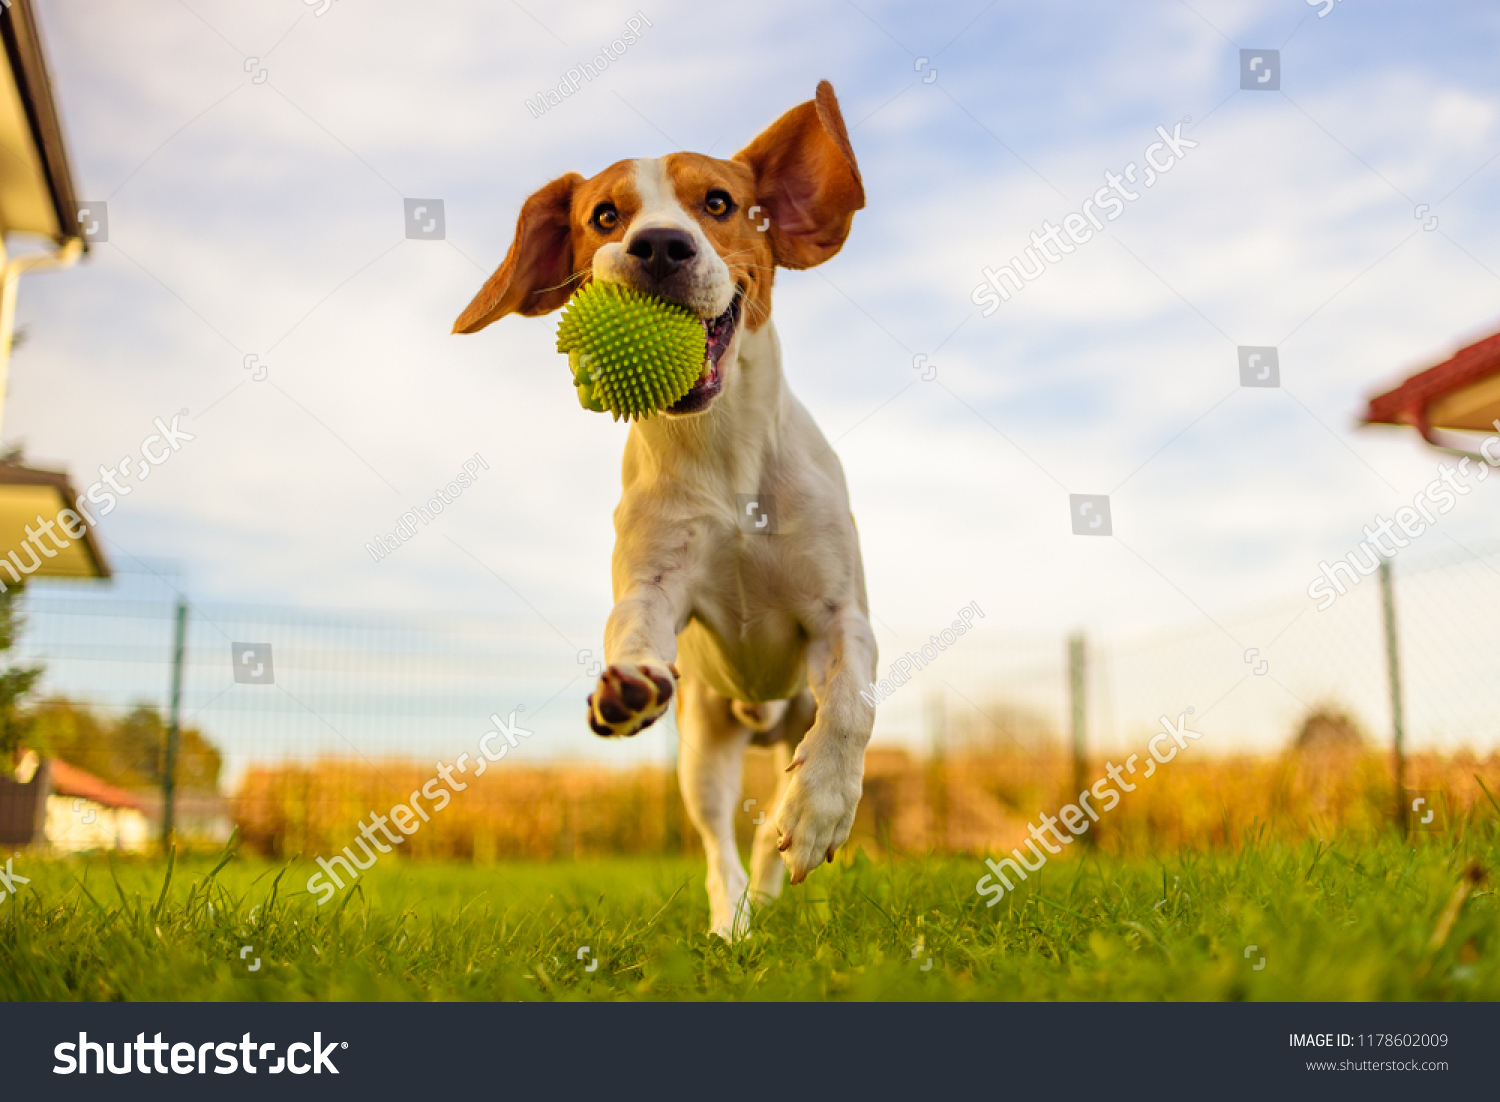 Beagle dog fun in garden outdoors run and jump with ball towards camera #1178602009